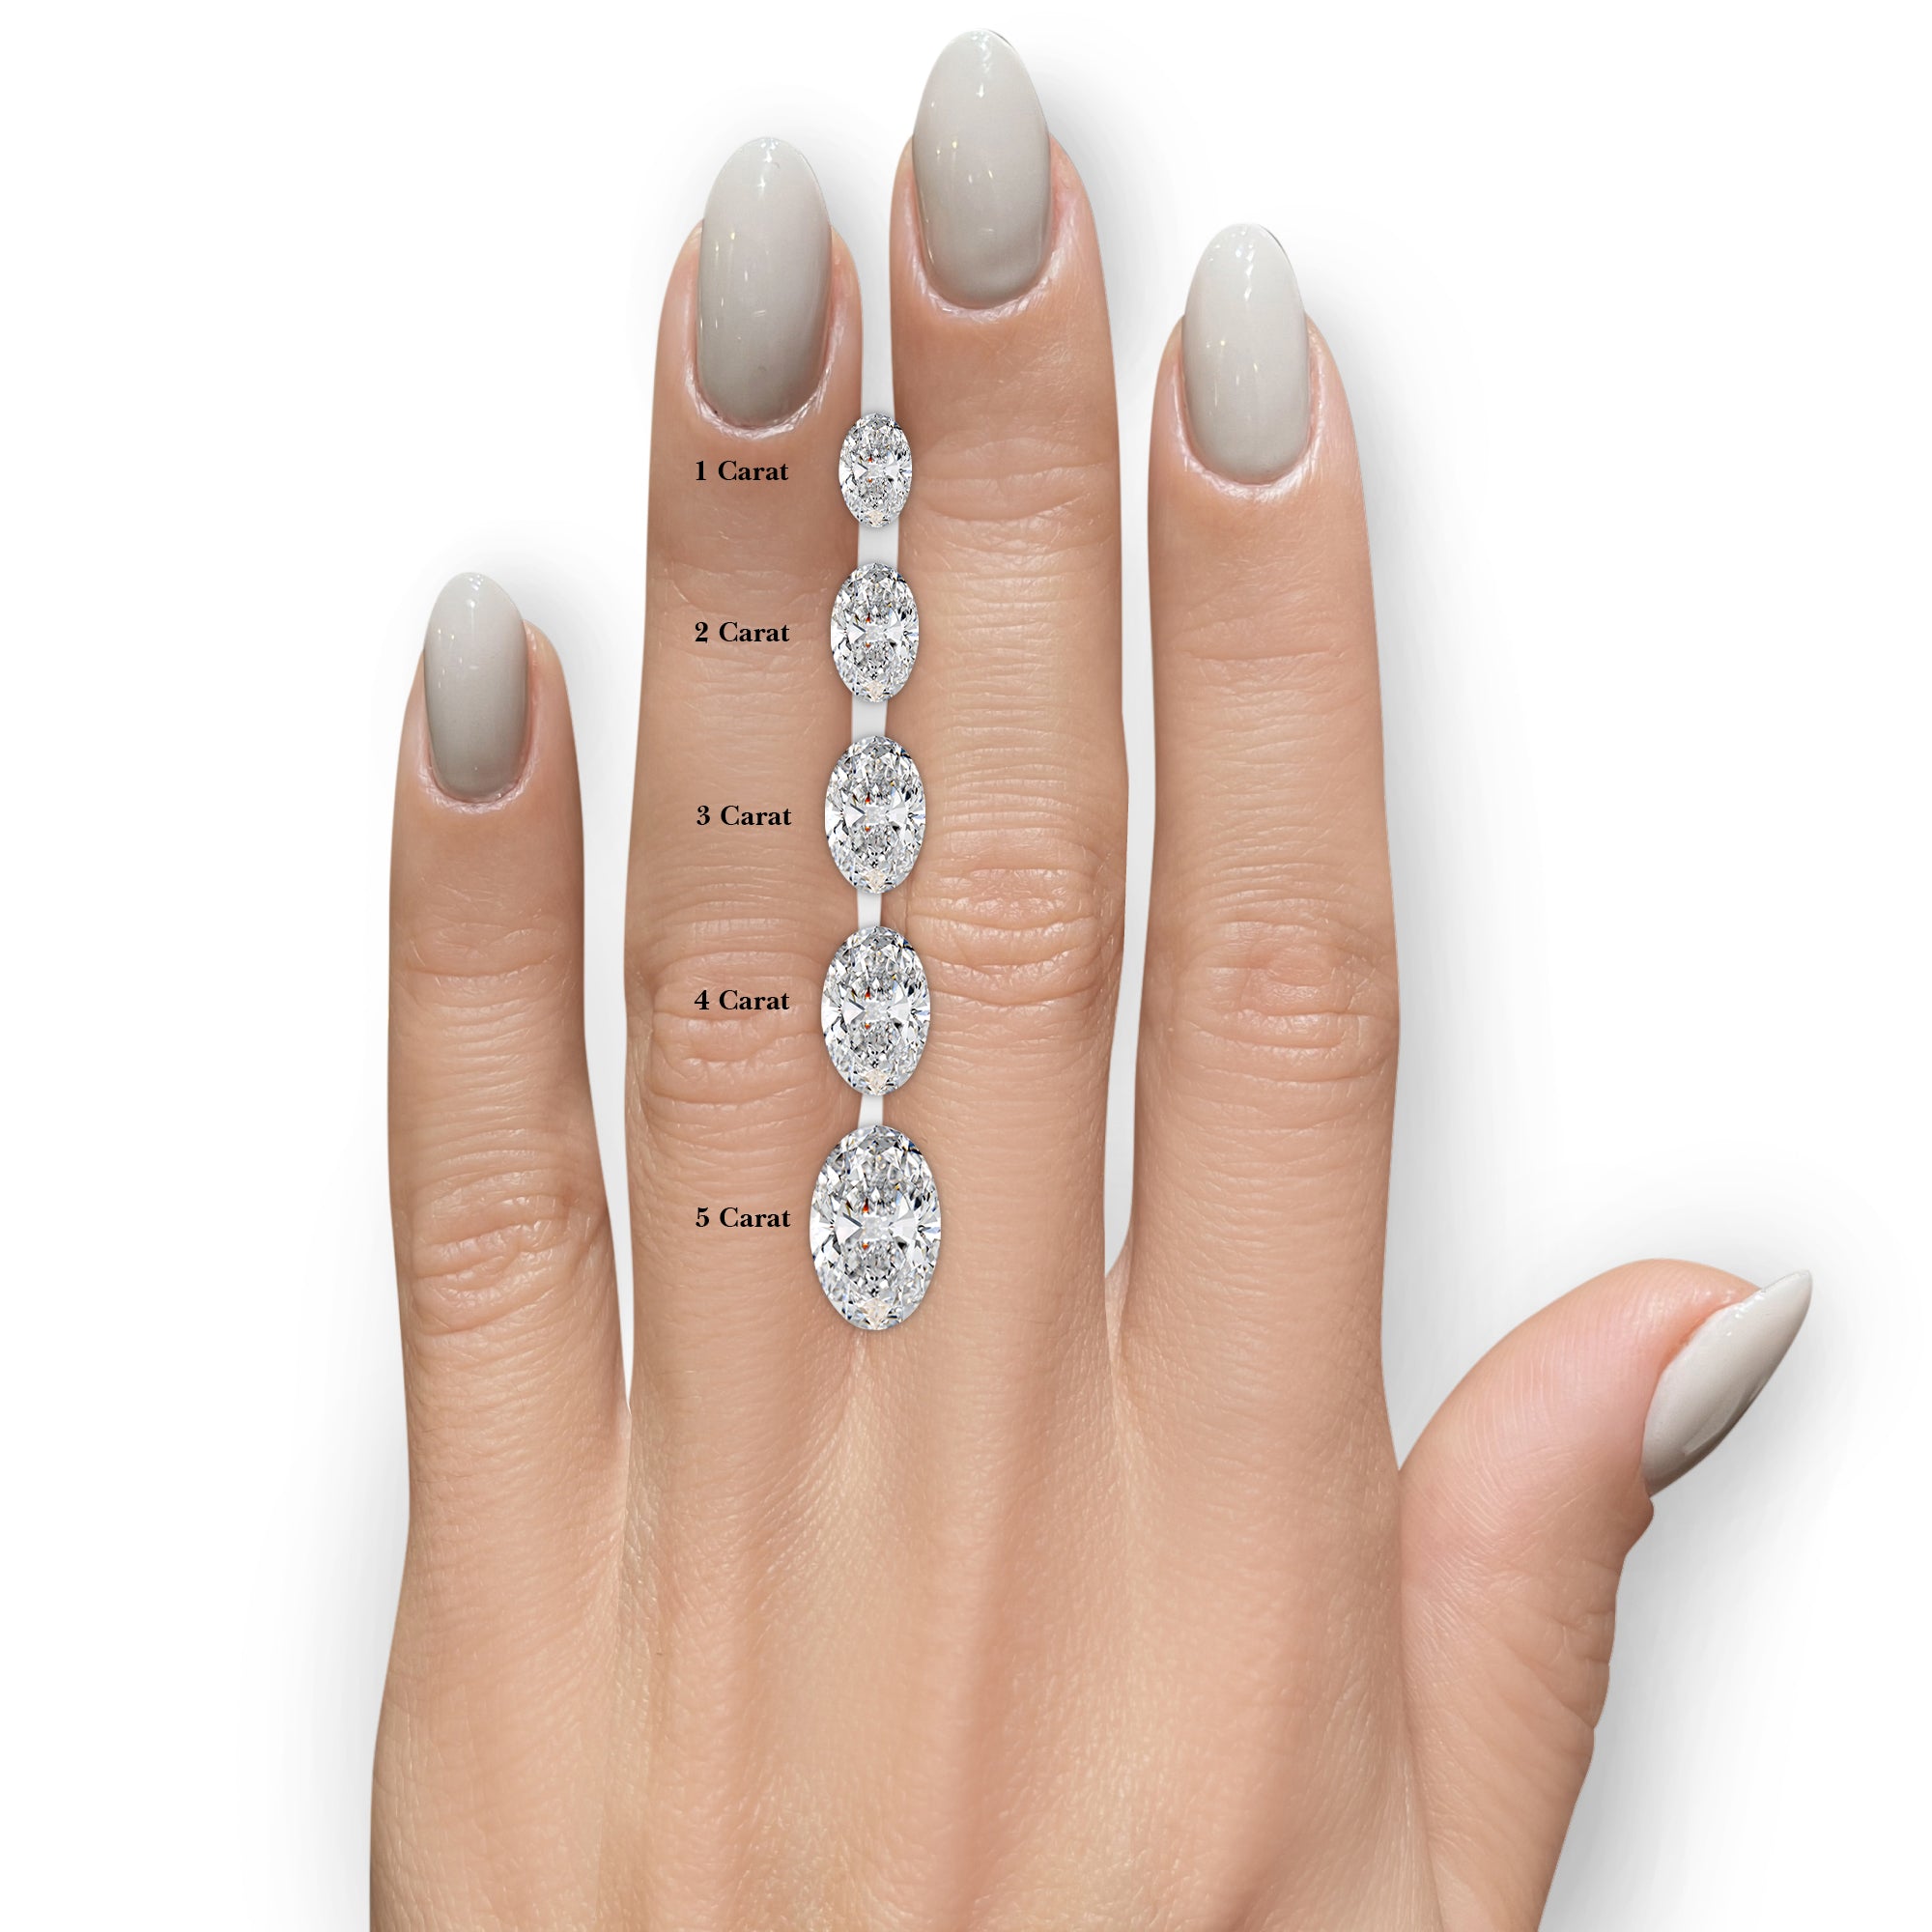 Brielle Diamond Engagement Ring -18K Yellow Gold